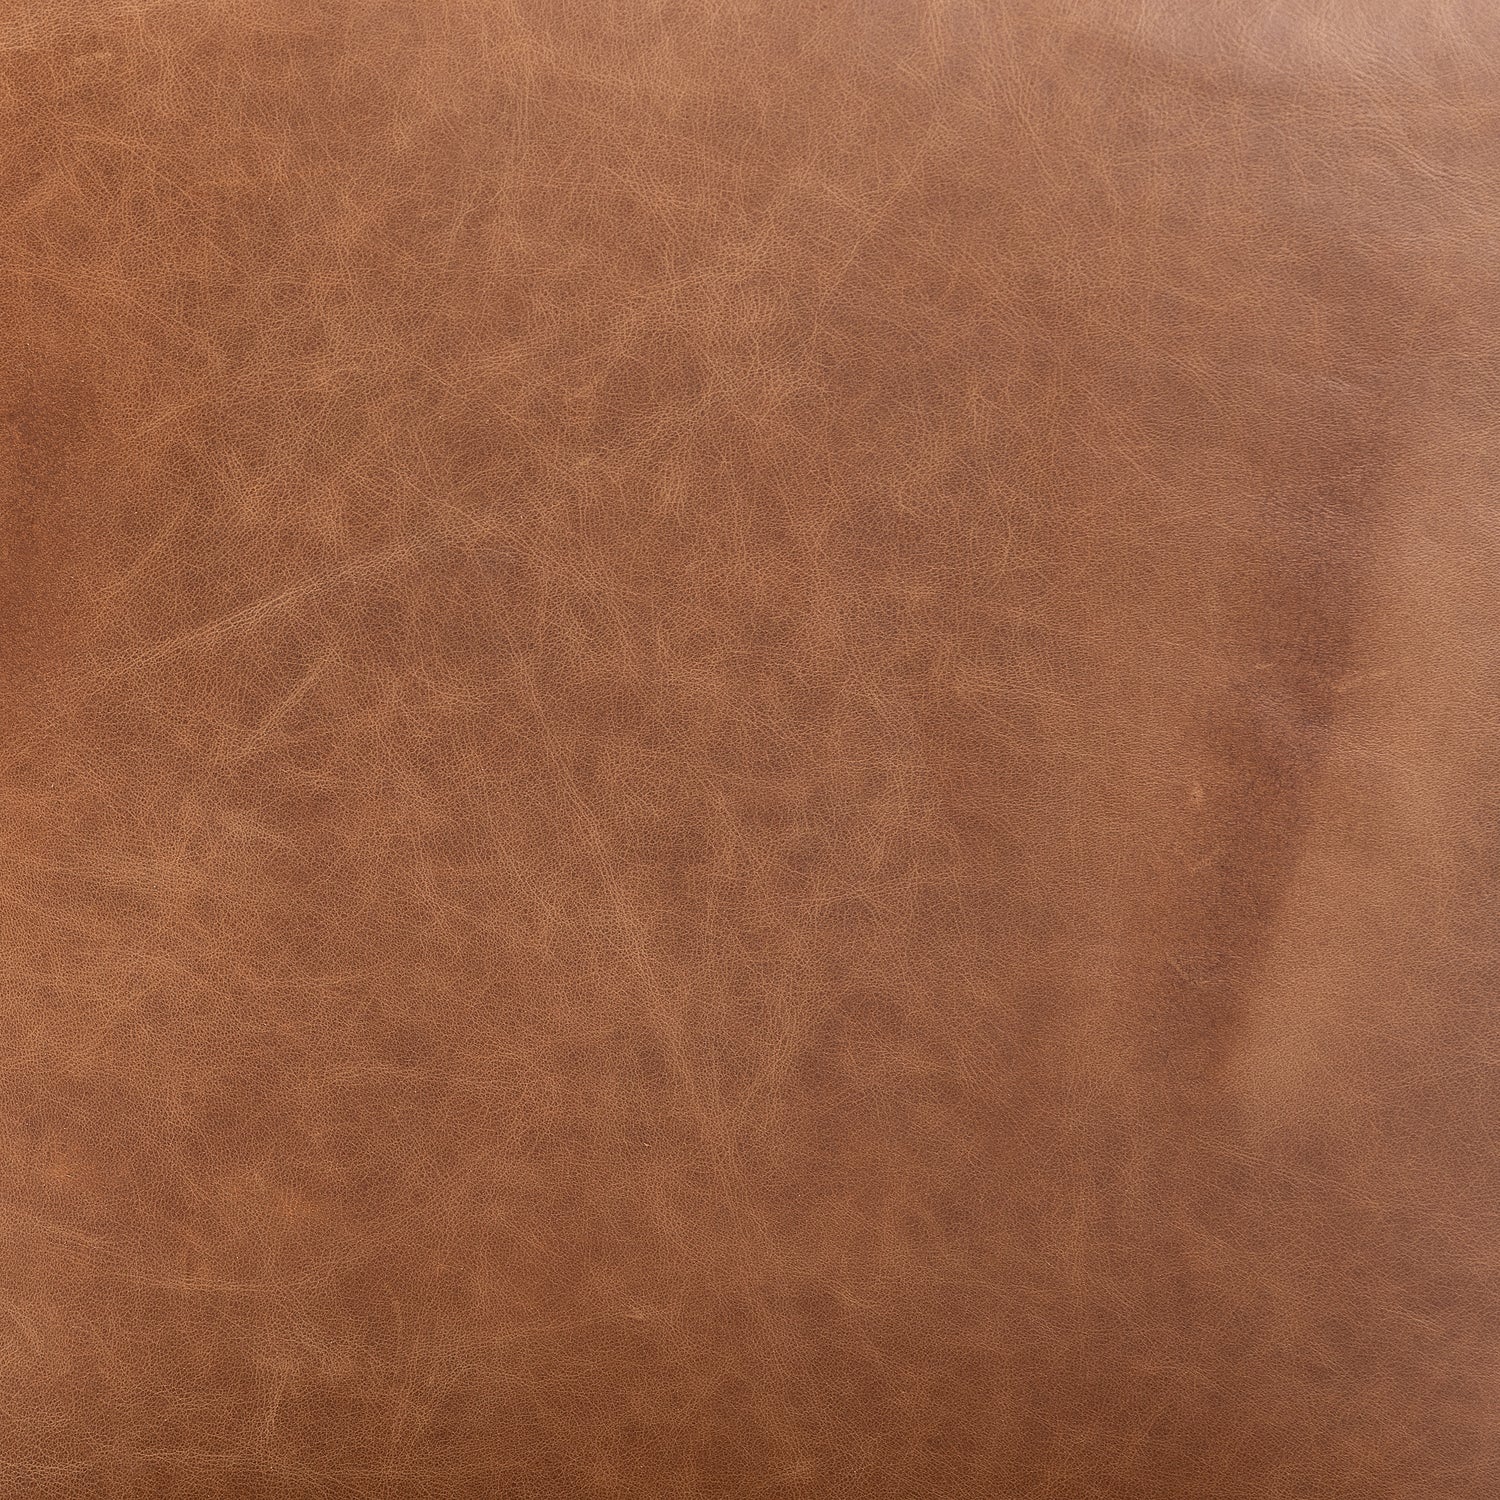 Sonoma Chestnut Leather & Drifted Oak with Midnight Iron (Counter Height) | Benton Bar/Counter Stool | Valley Ridge Furniture